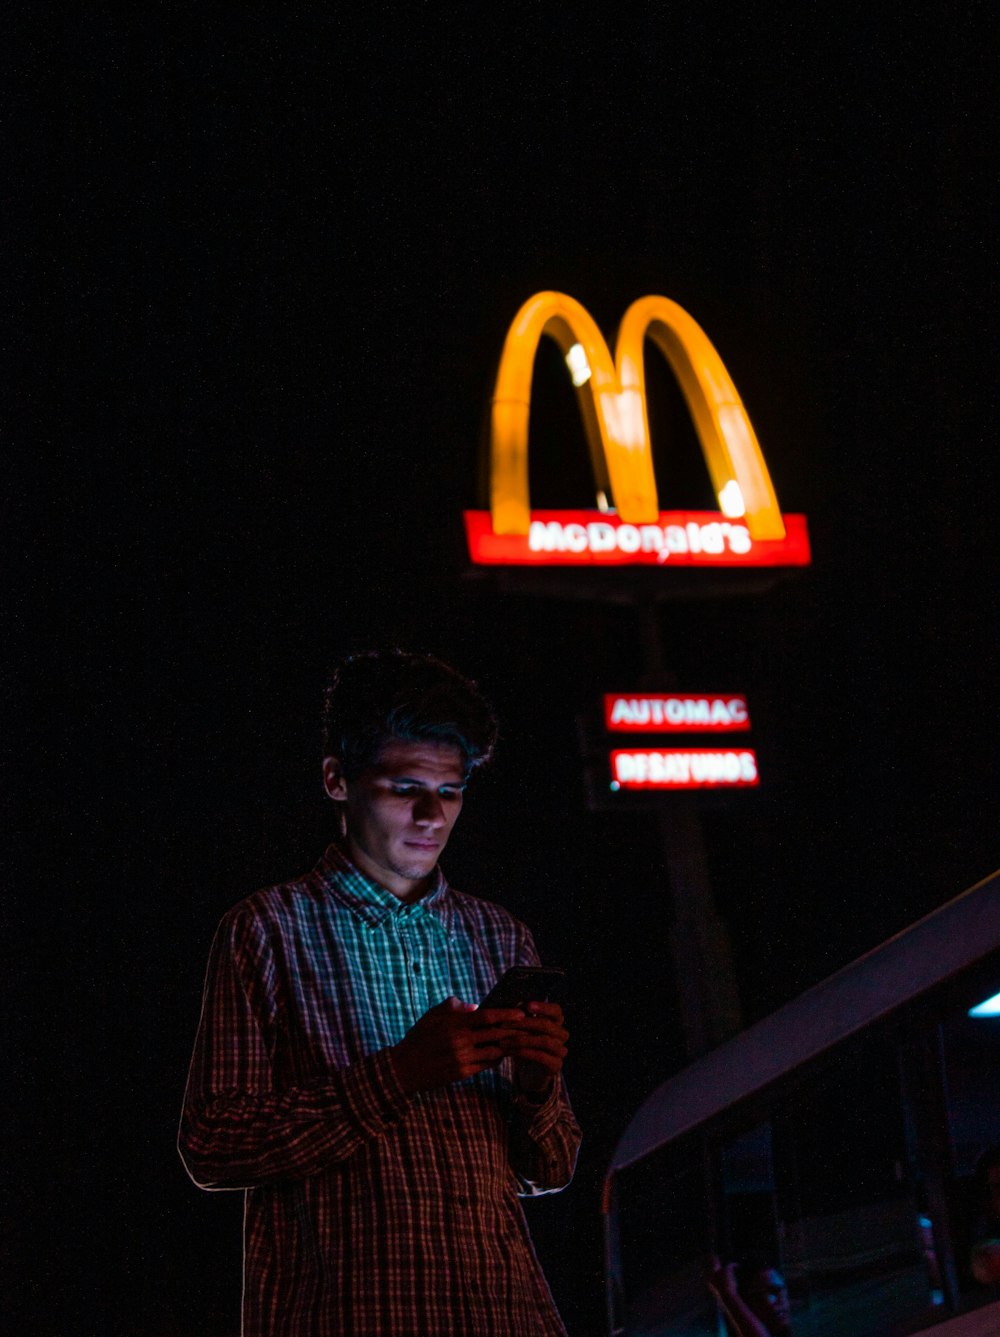 man using Android smartphone near McDonalds